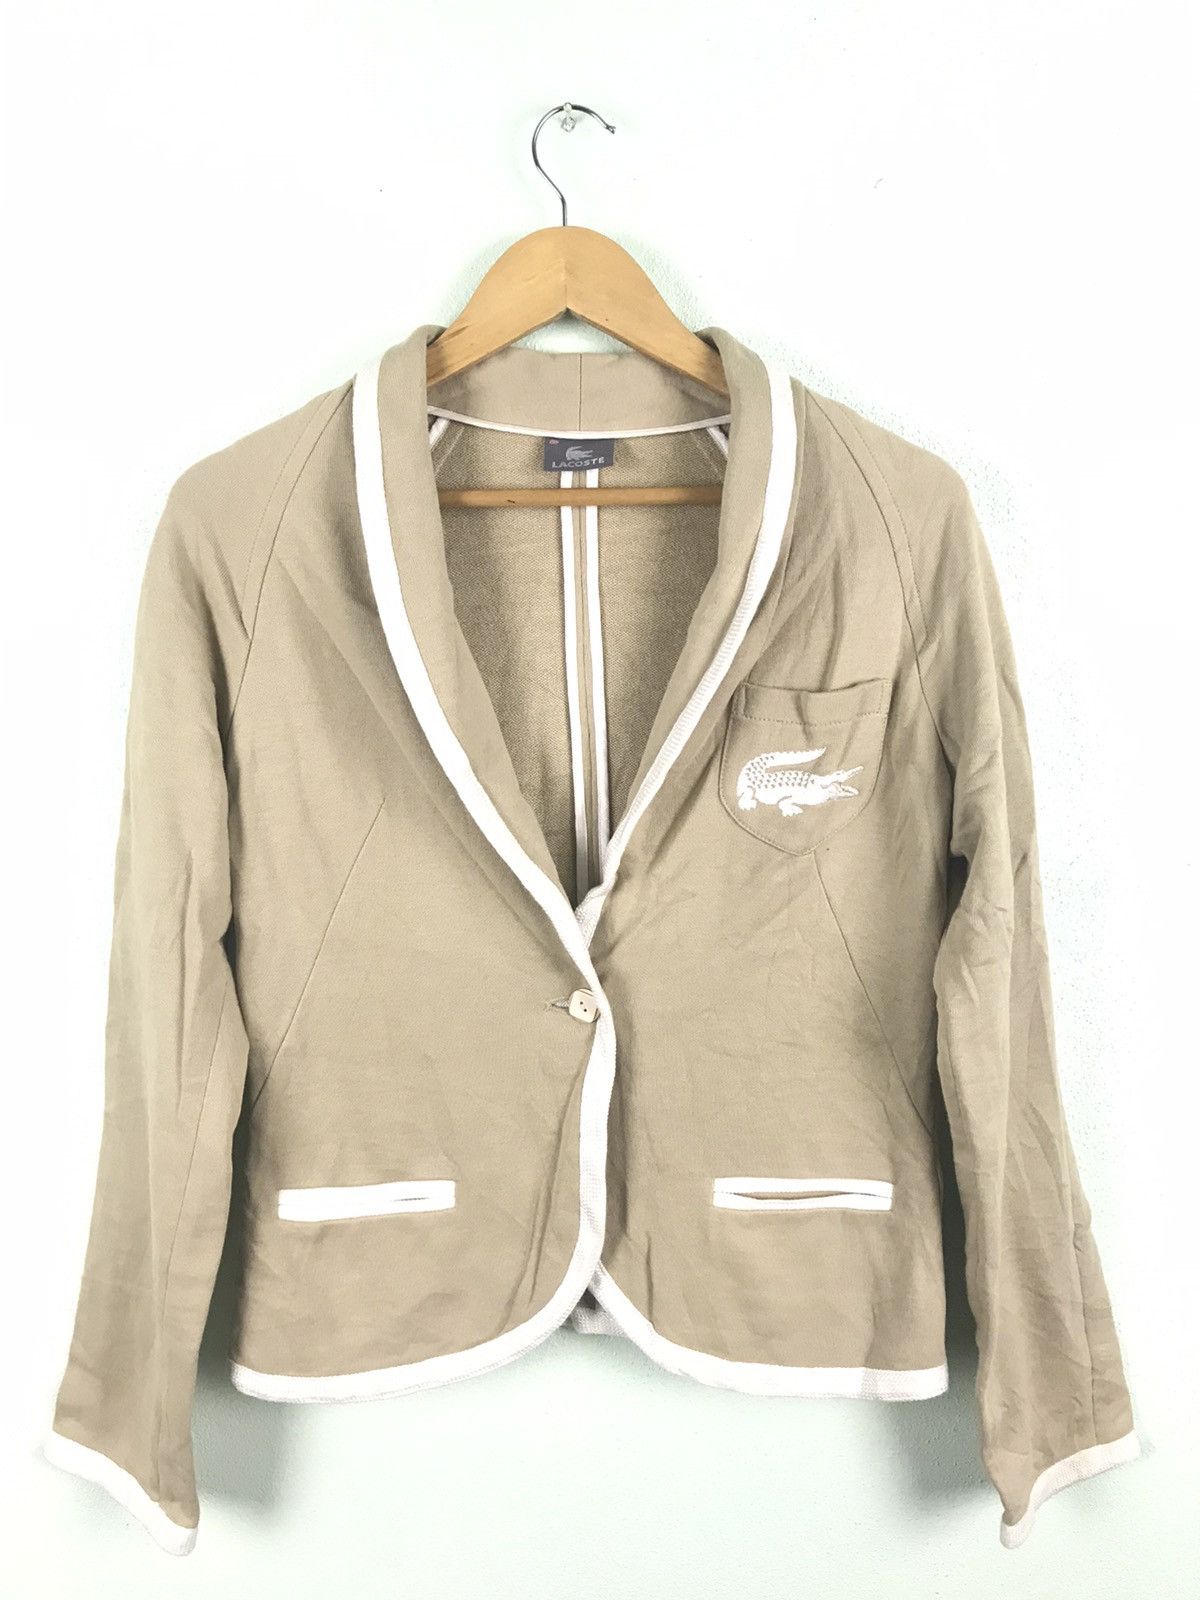 Lacoste big logo jacket - GH1019 - 1